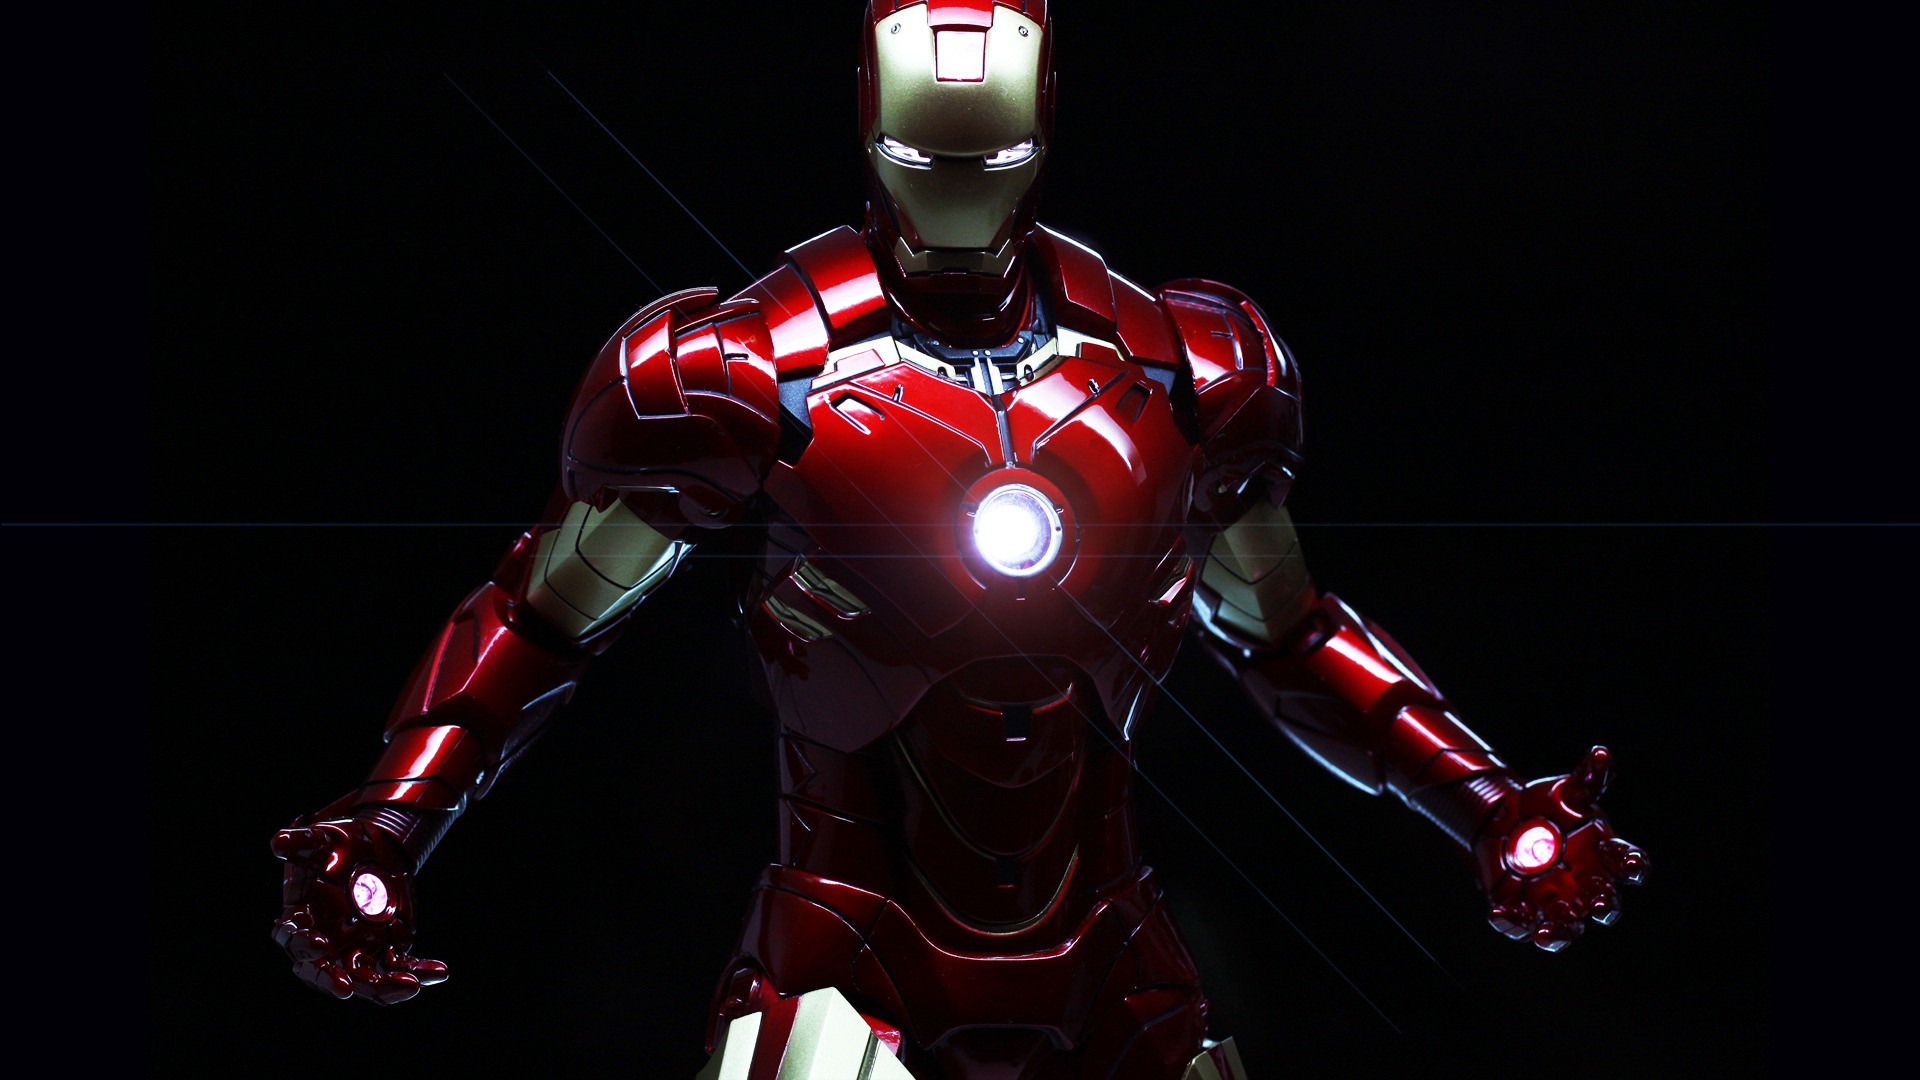 Iron Man Hud wallpaper by SETH_214200 - Download on ZEDGE™ | 2ef7